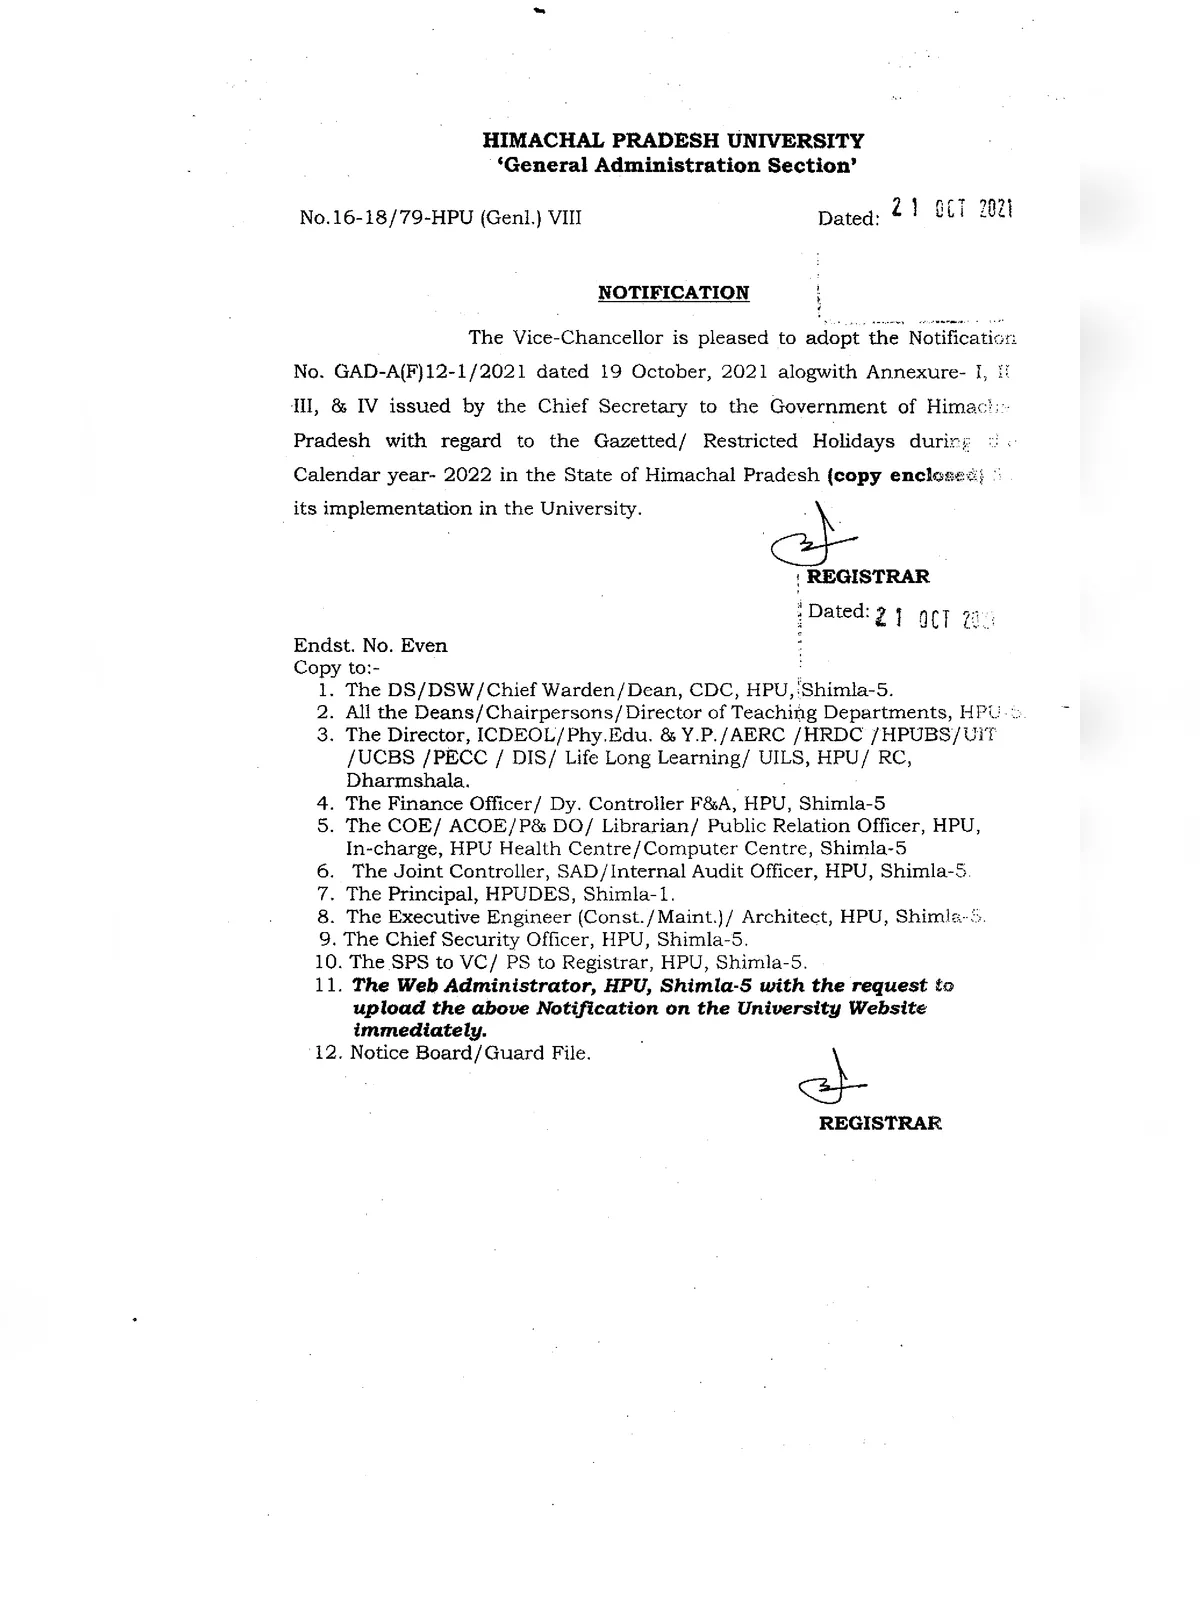 Himachal Pradesh (HP) Government Holidays List 2022